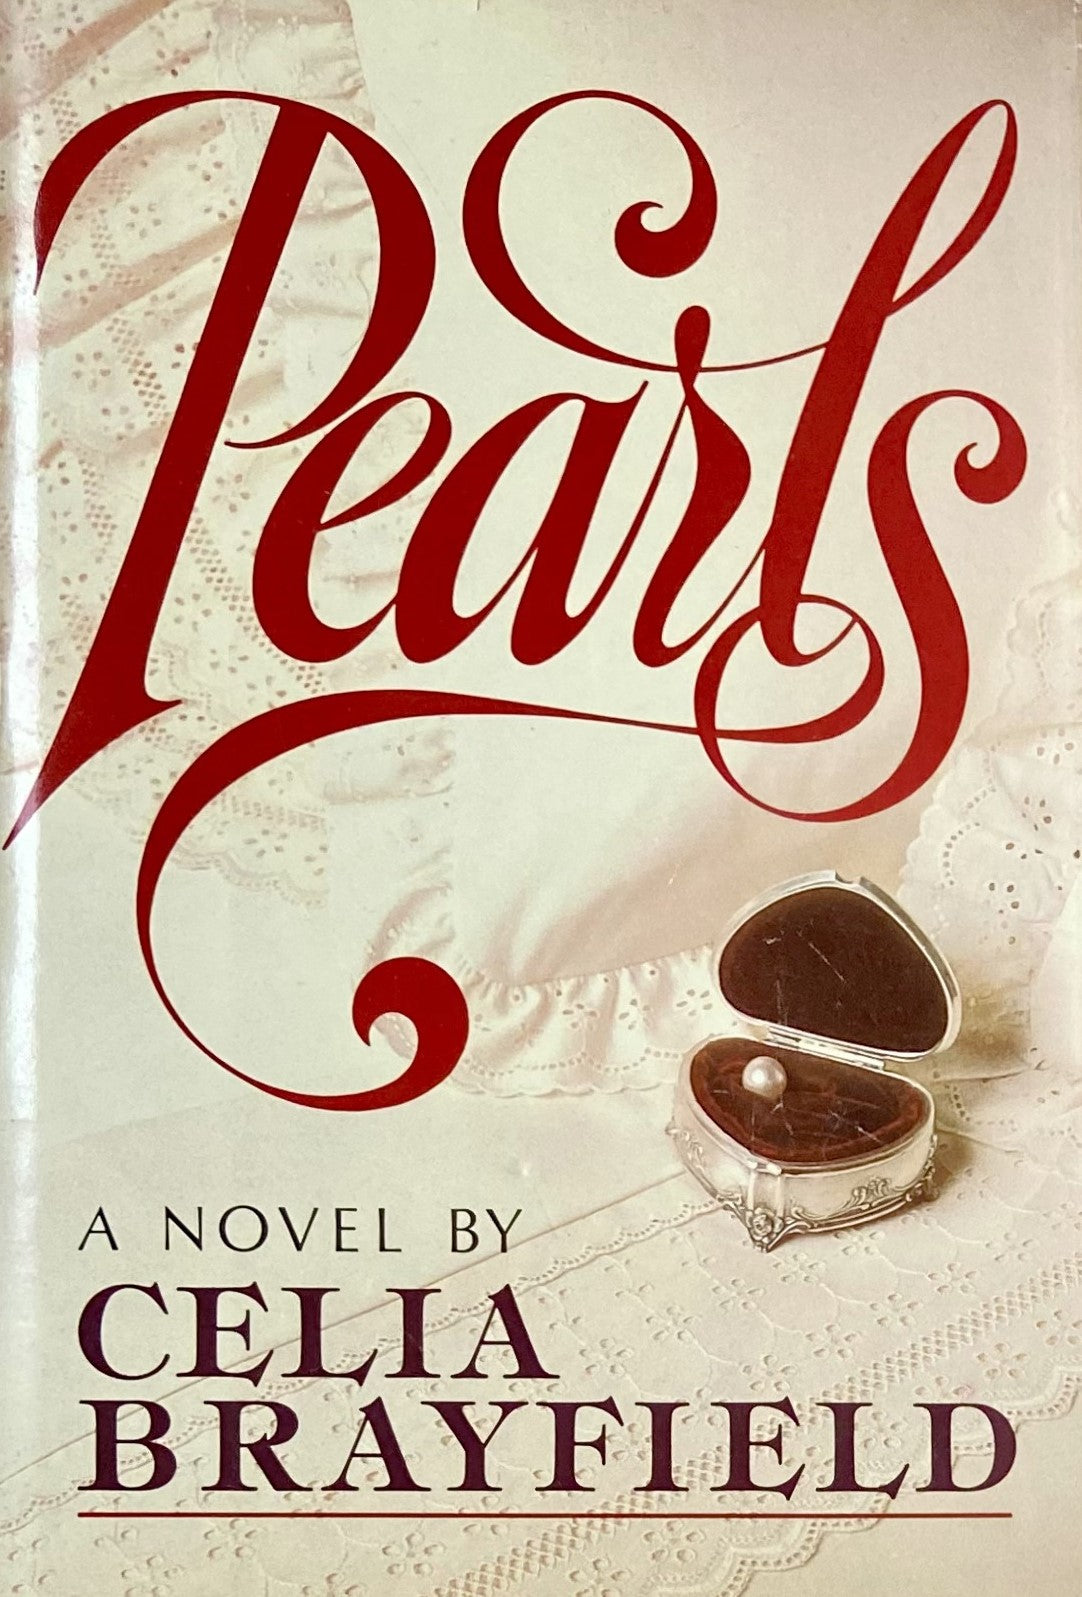 Livre ISBN 0688062113 Pearls (Celia Brayfield)